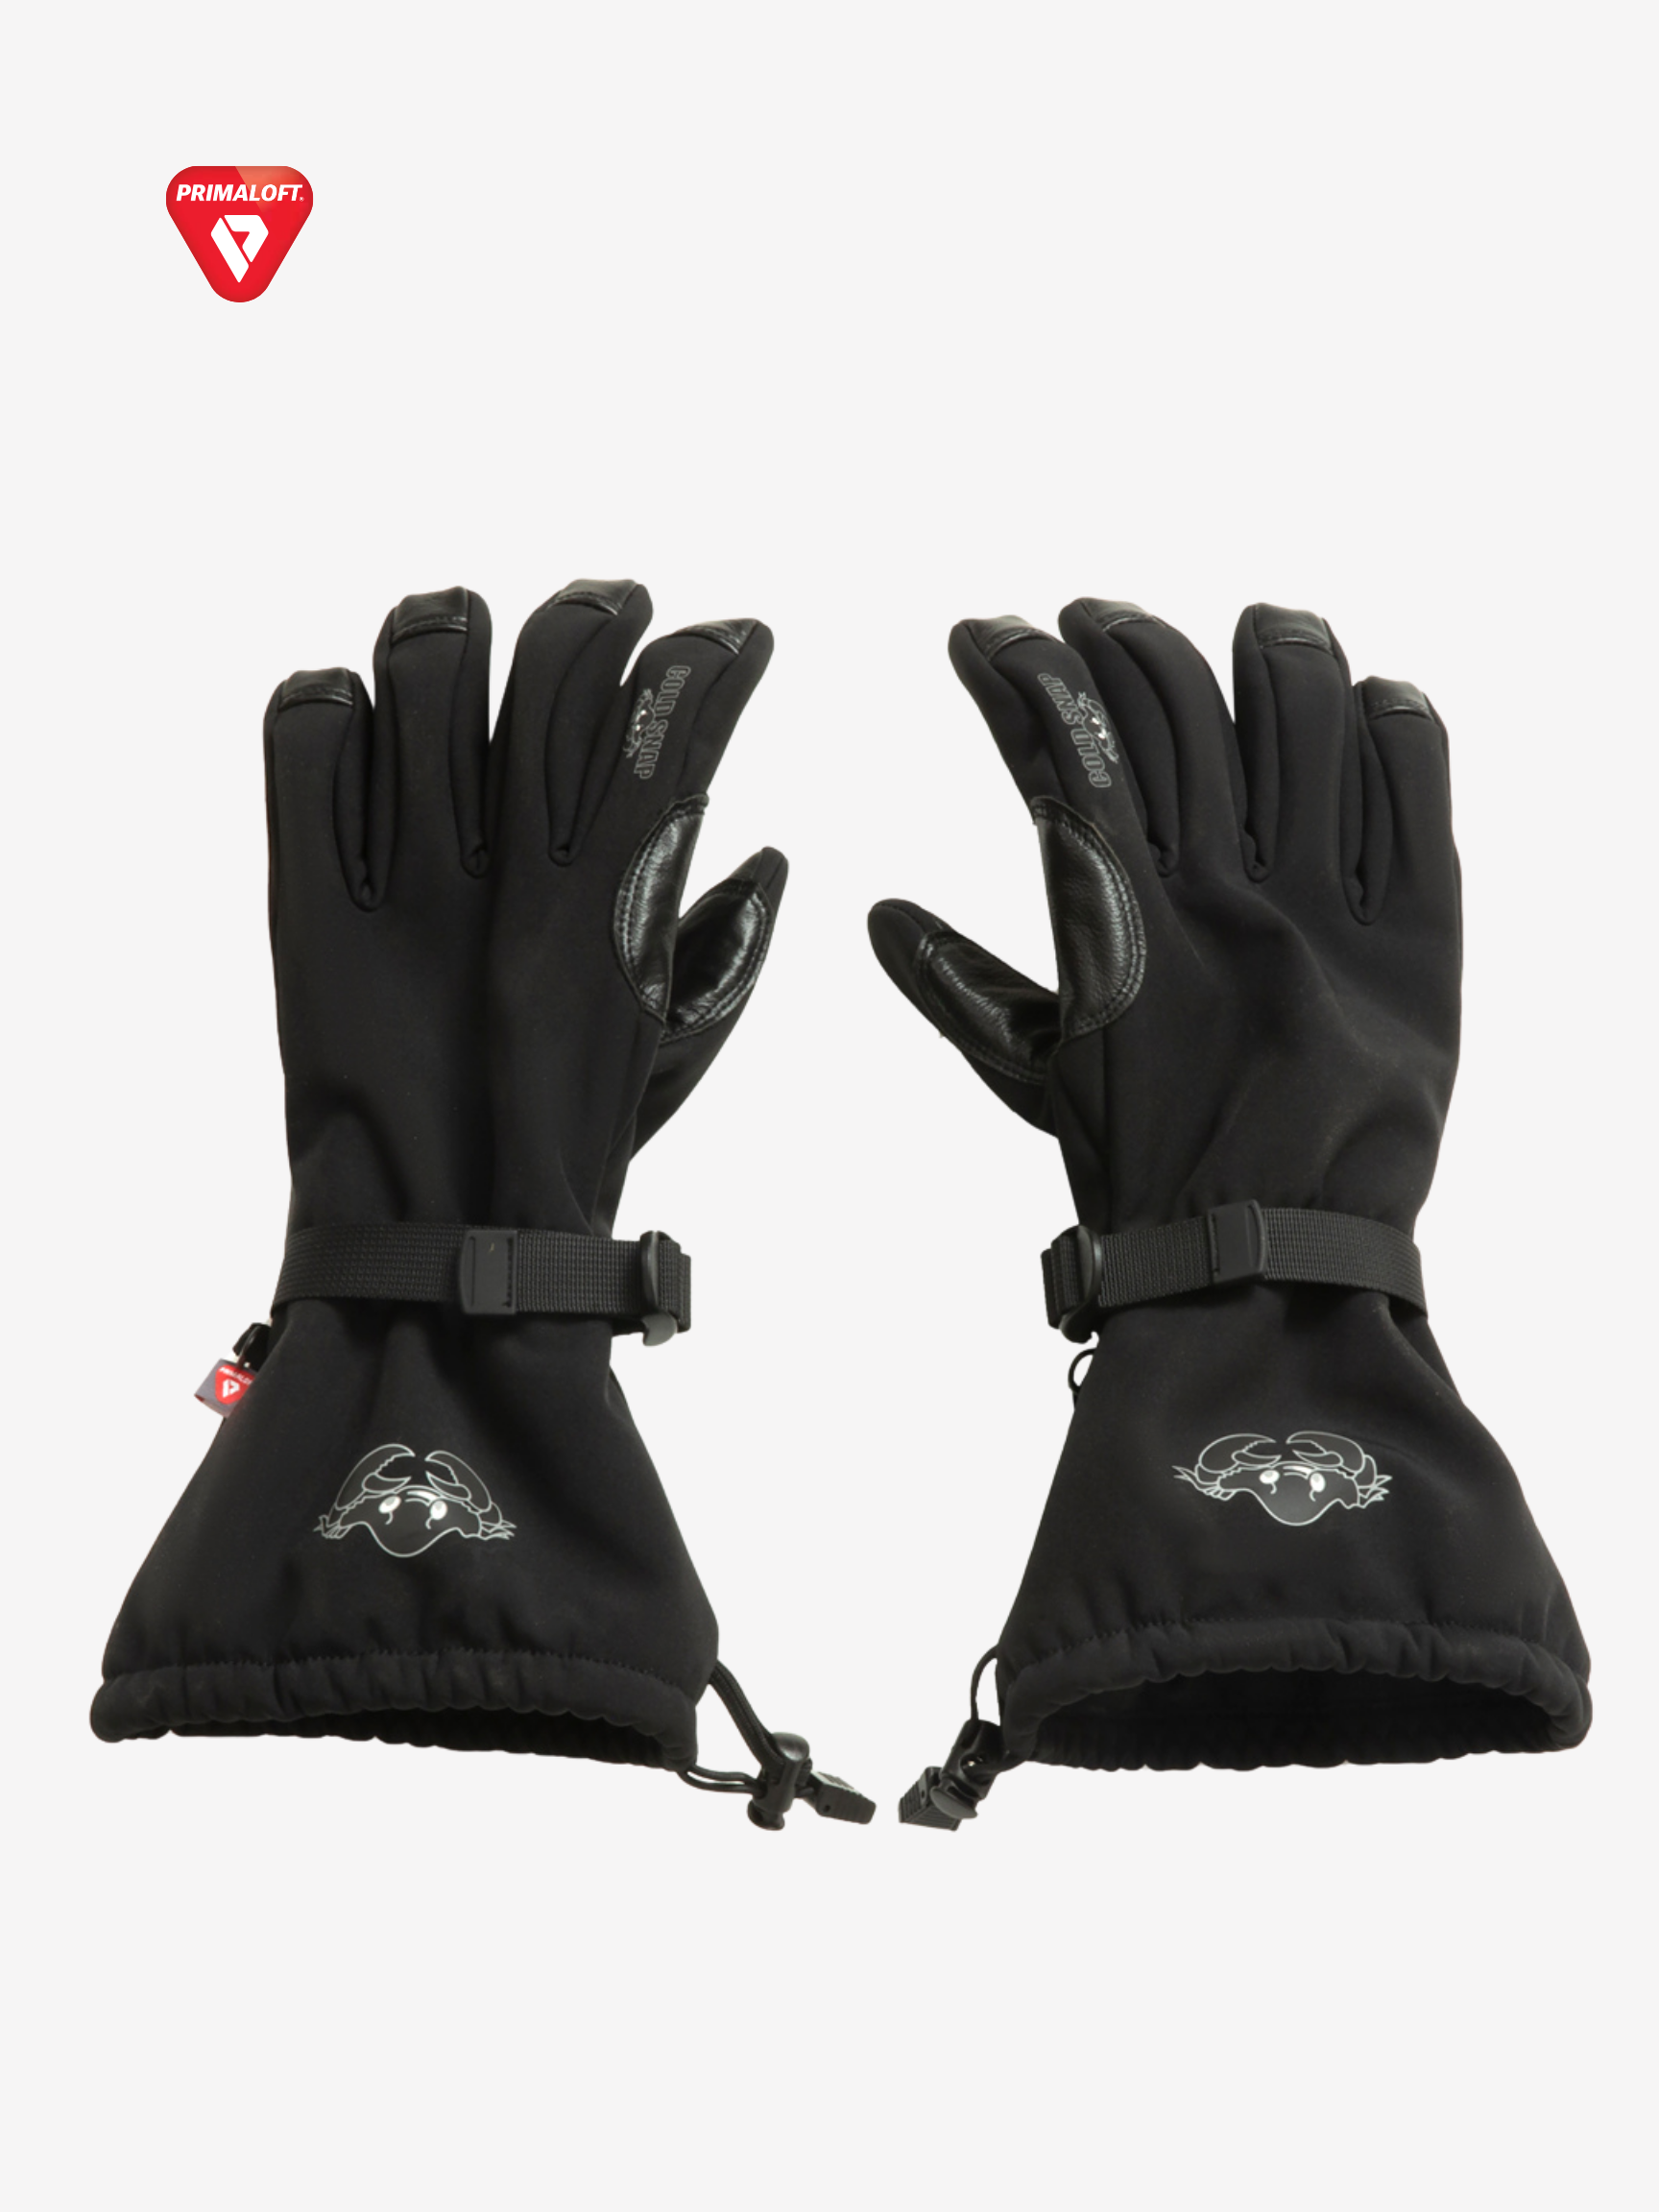 CS-ONE Series™ Eliminator Glove